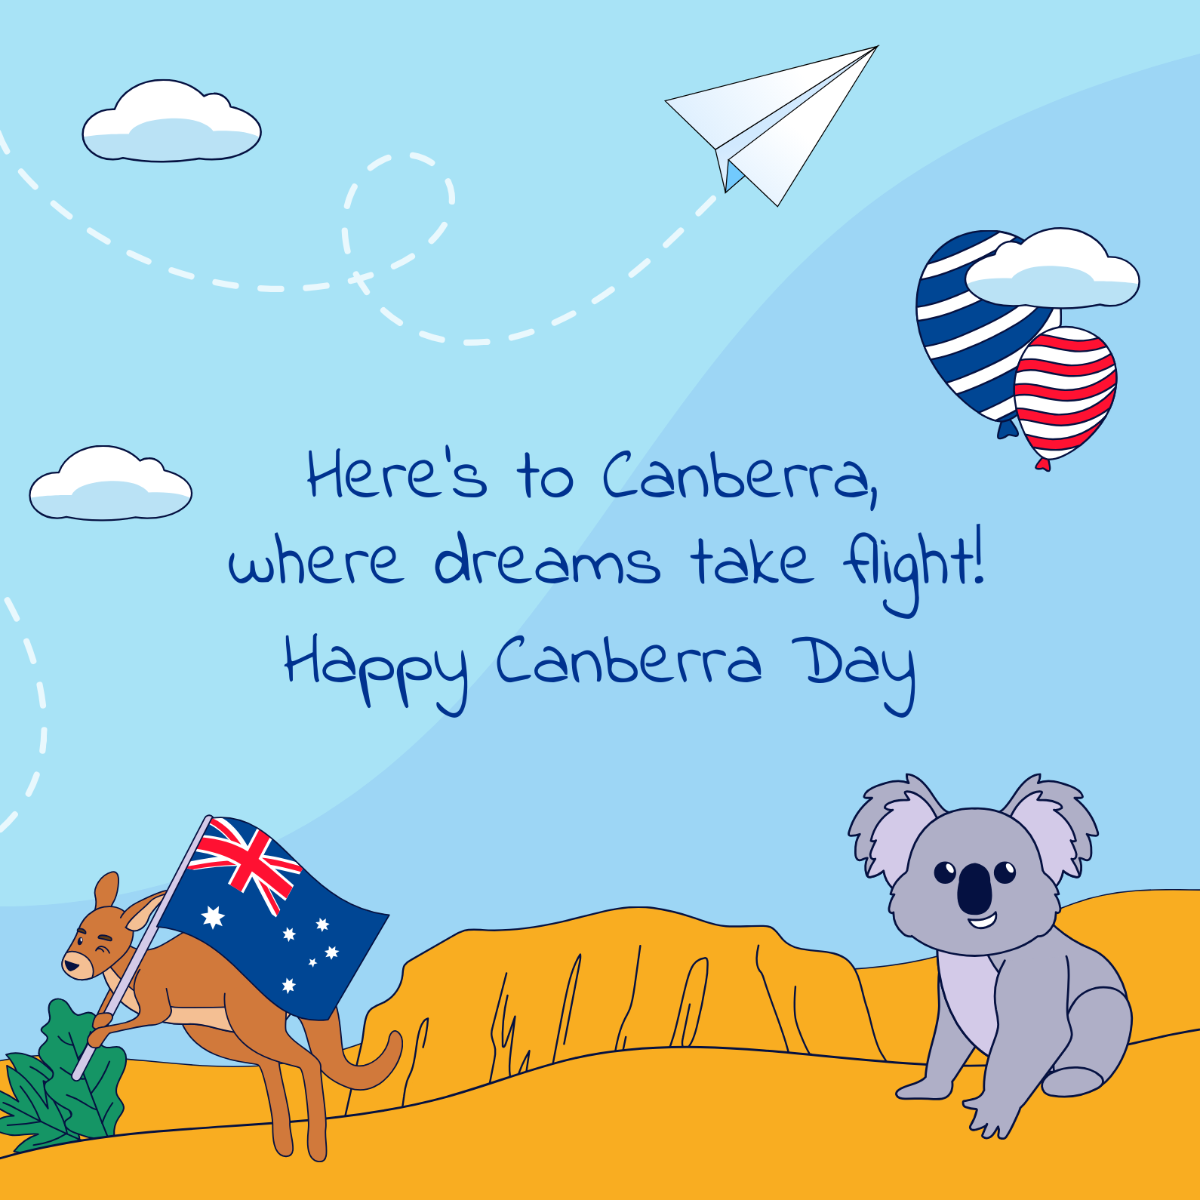 Canberra Day LinkedIn Post